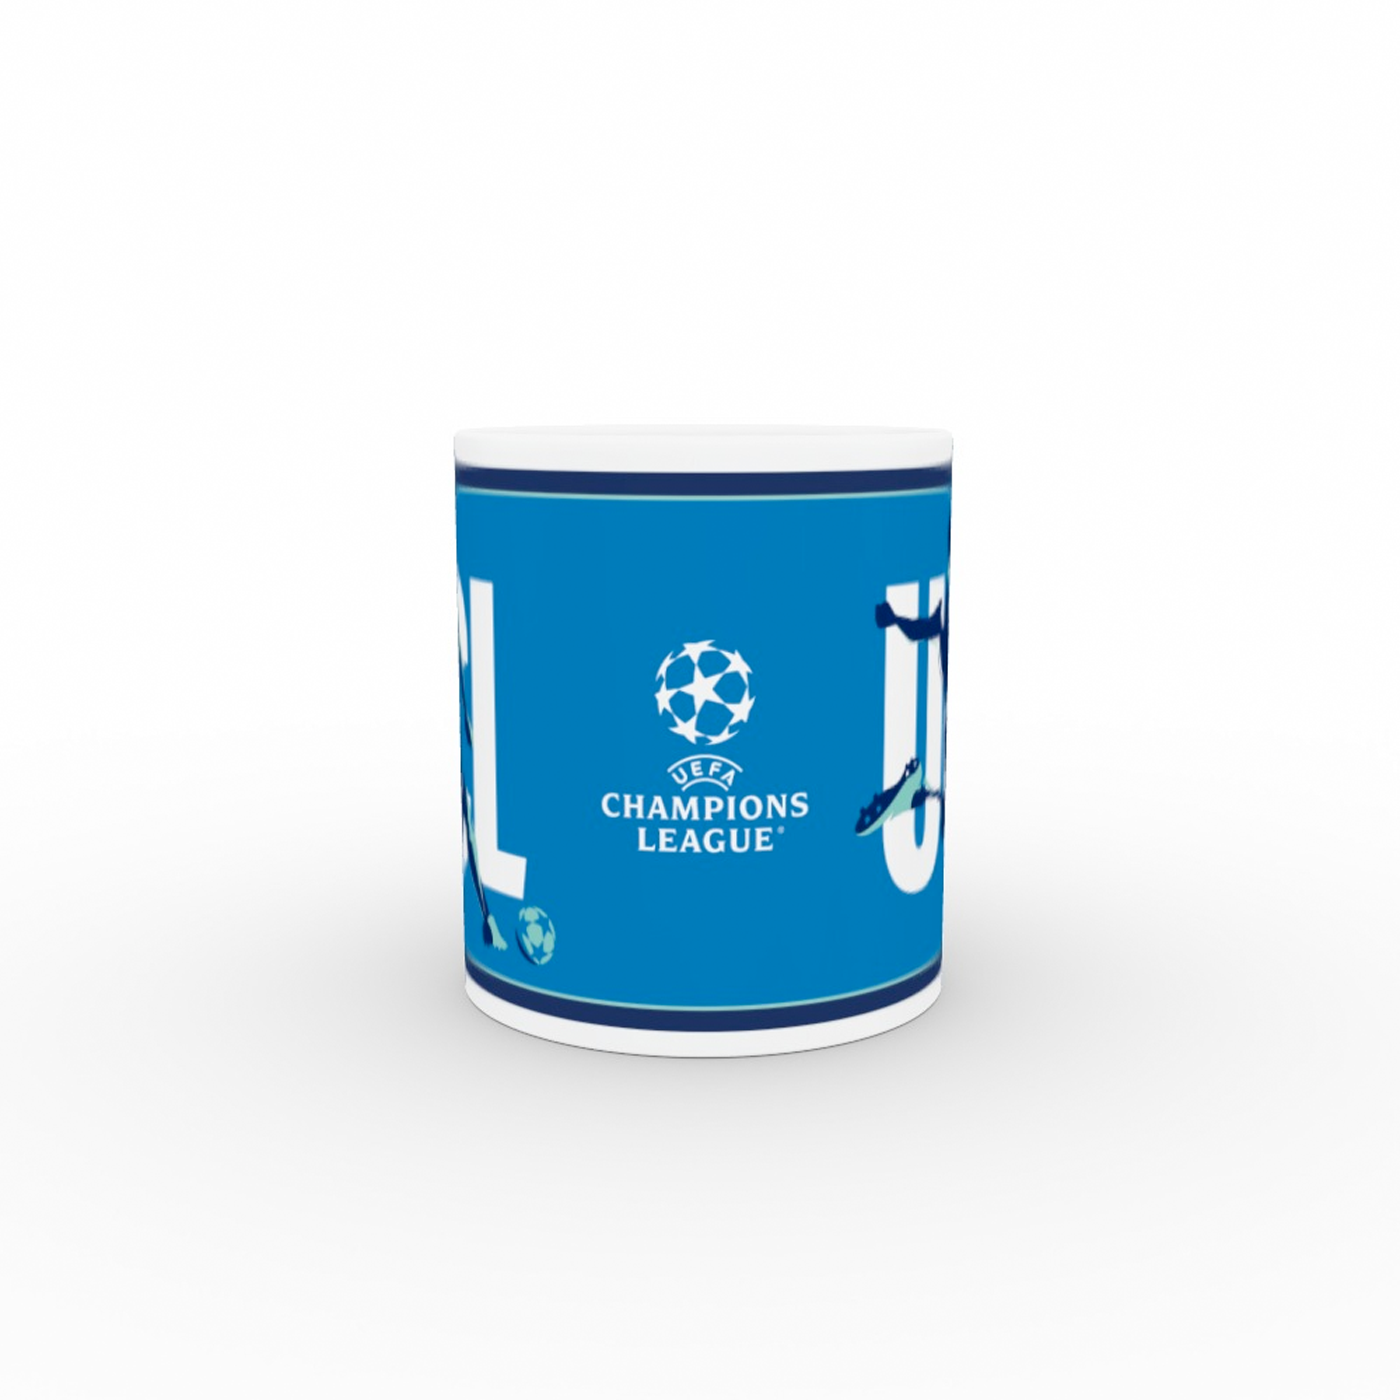 Champions League Football Player Mug